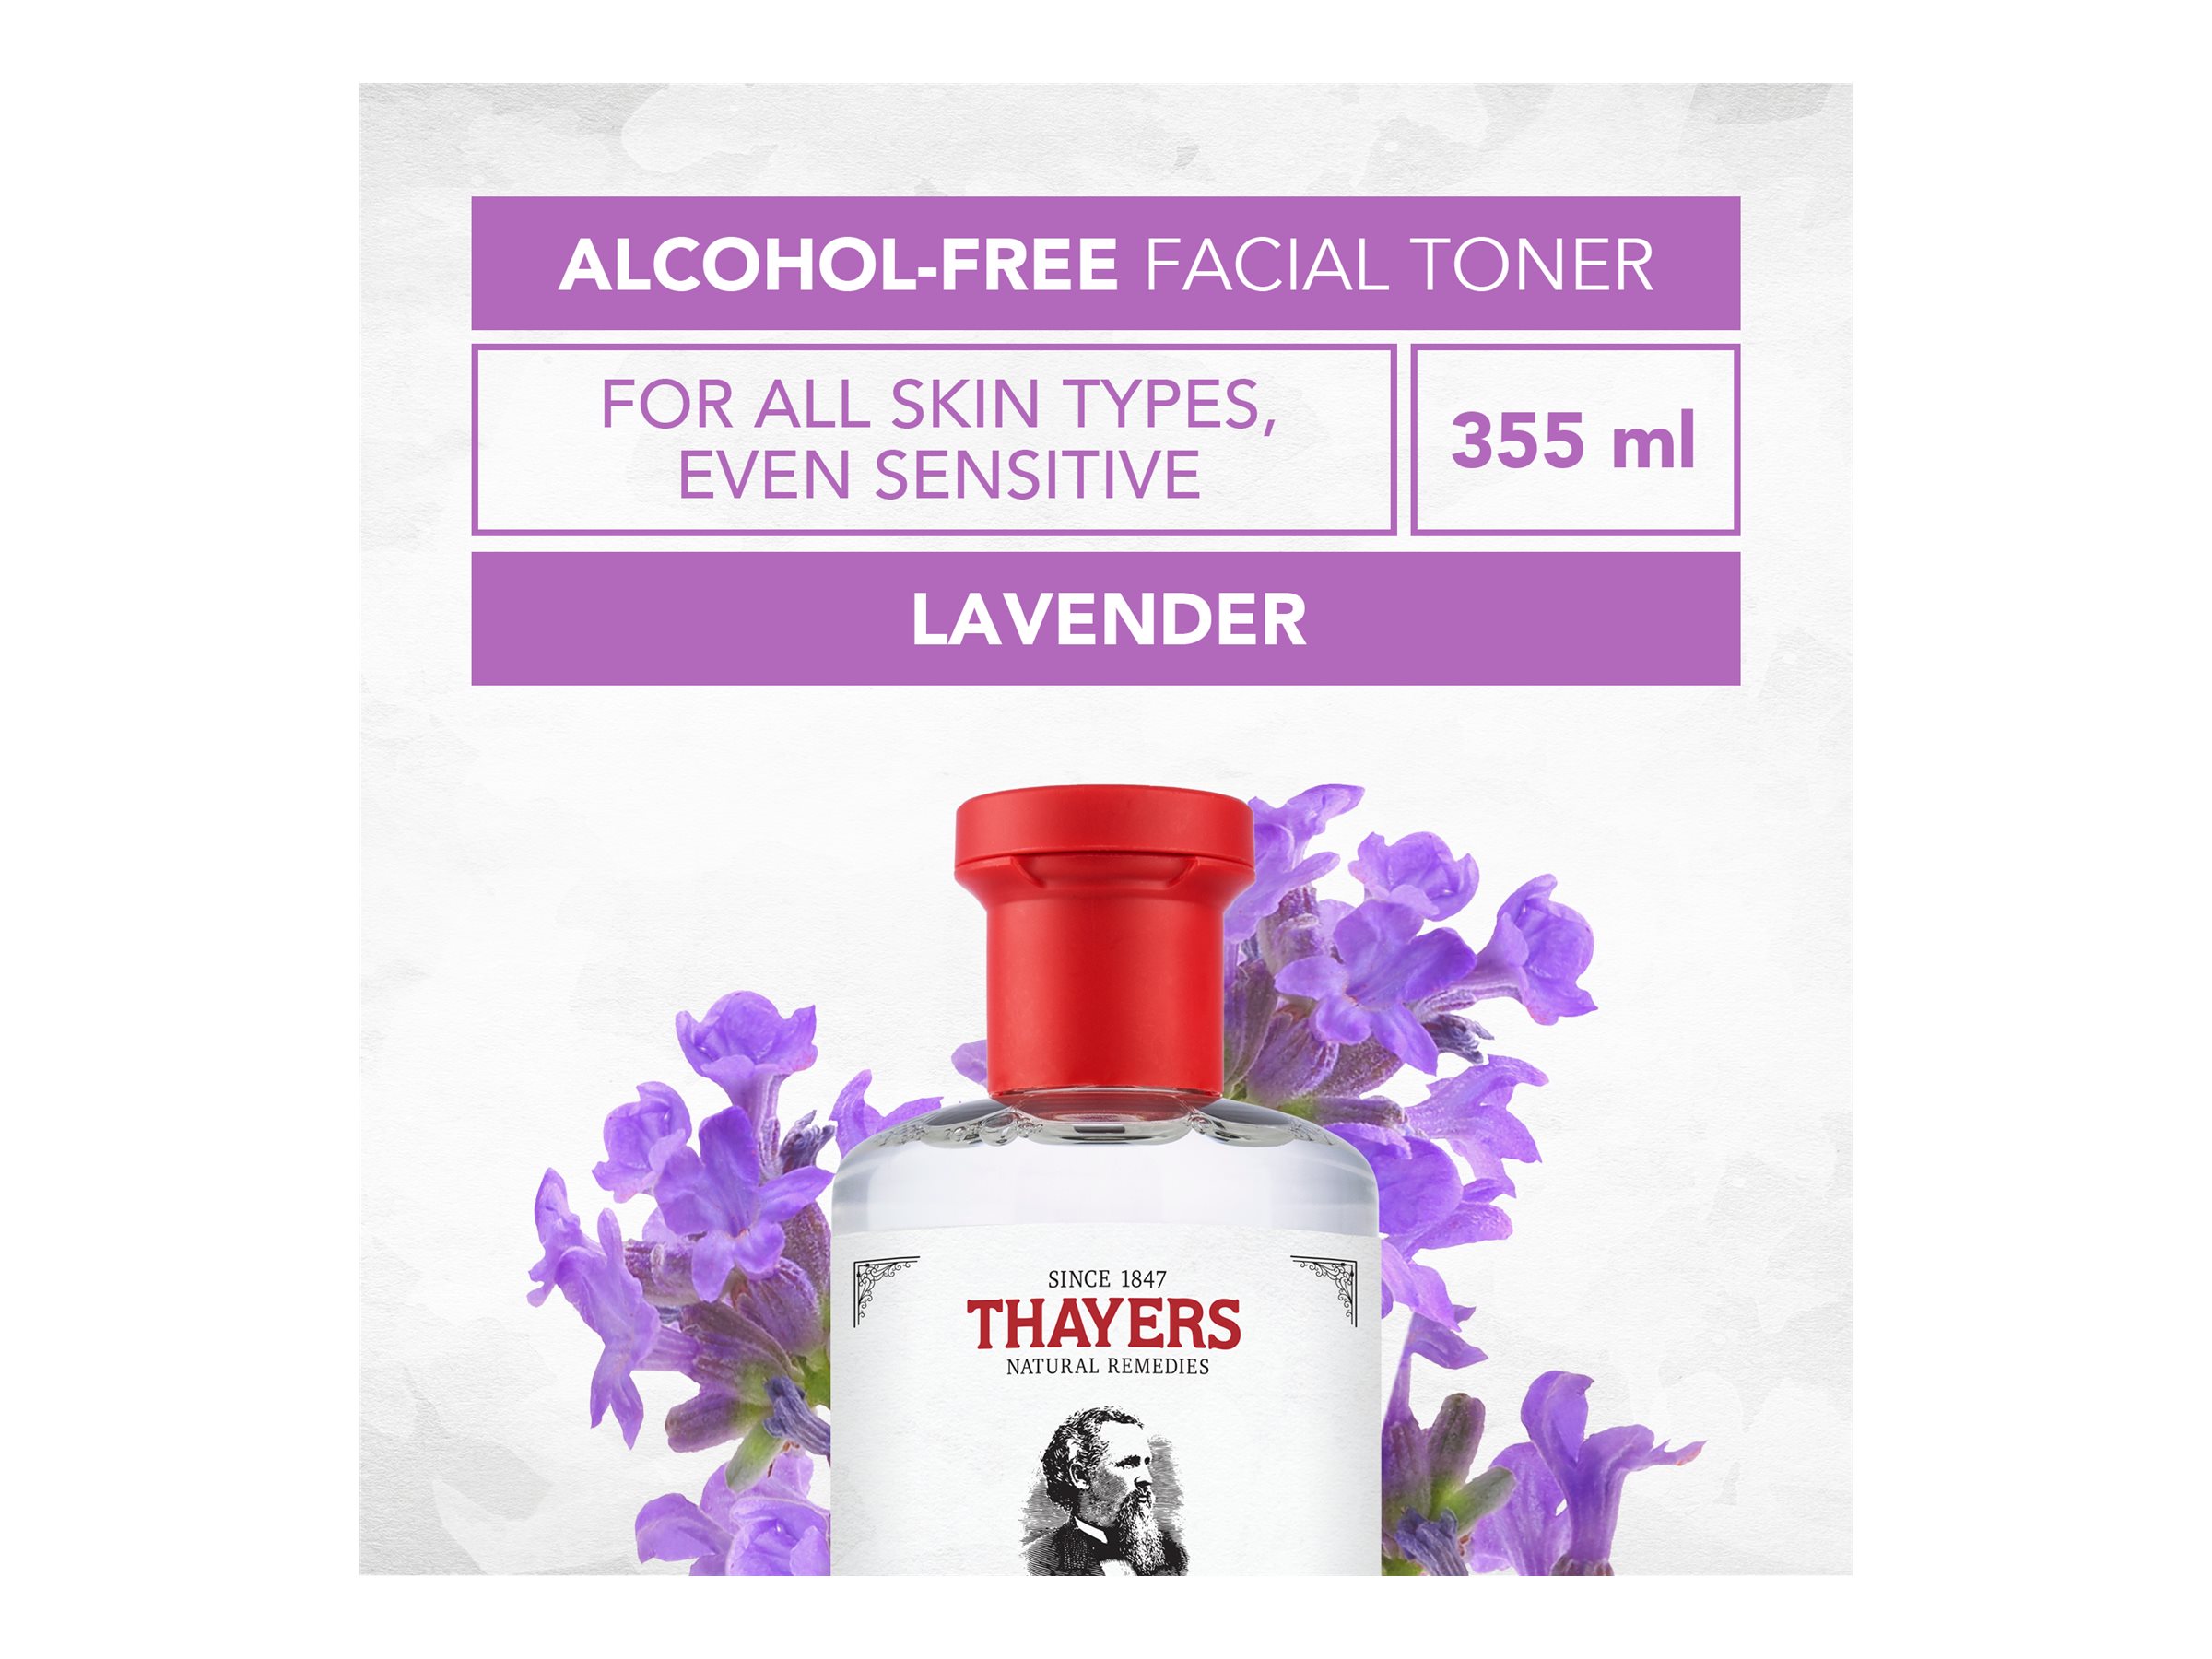 THAYERS Facial Toner Alcohol-Free - Witch Hazel with Aloe Vera Formula - Lavender - All Skin Types - 355mL